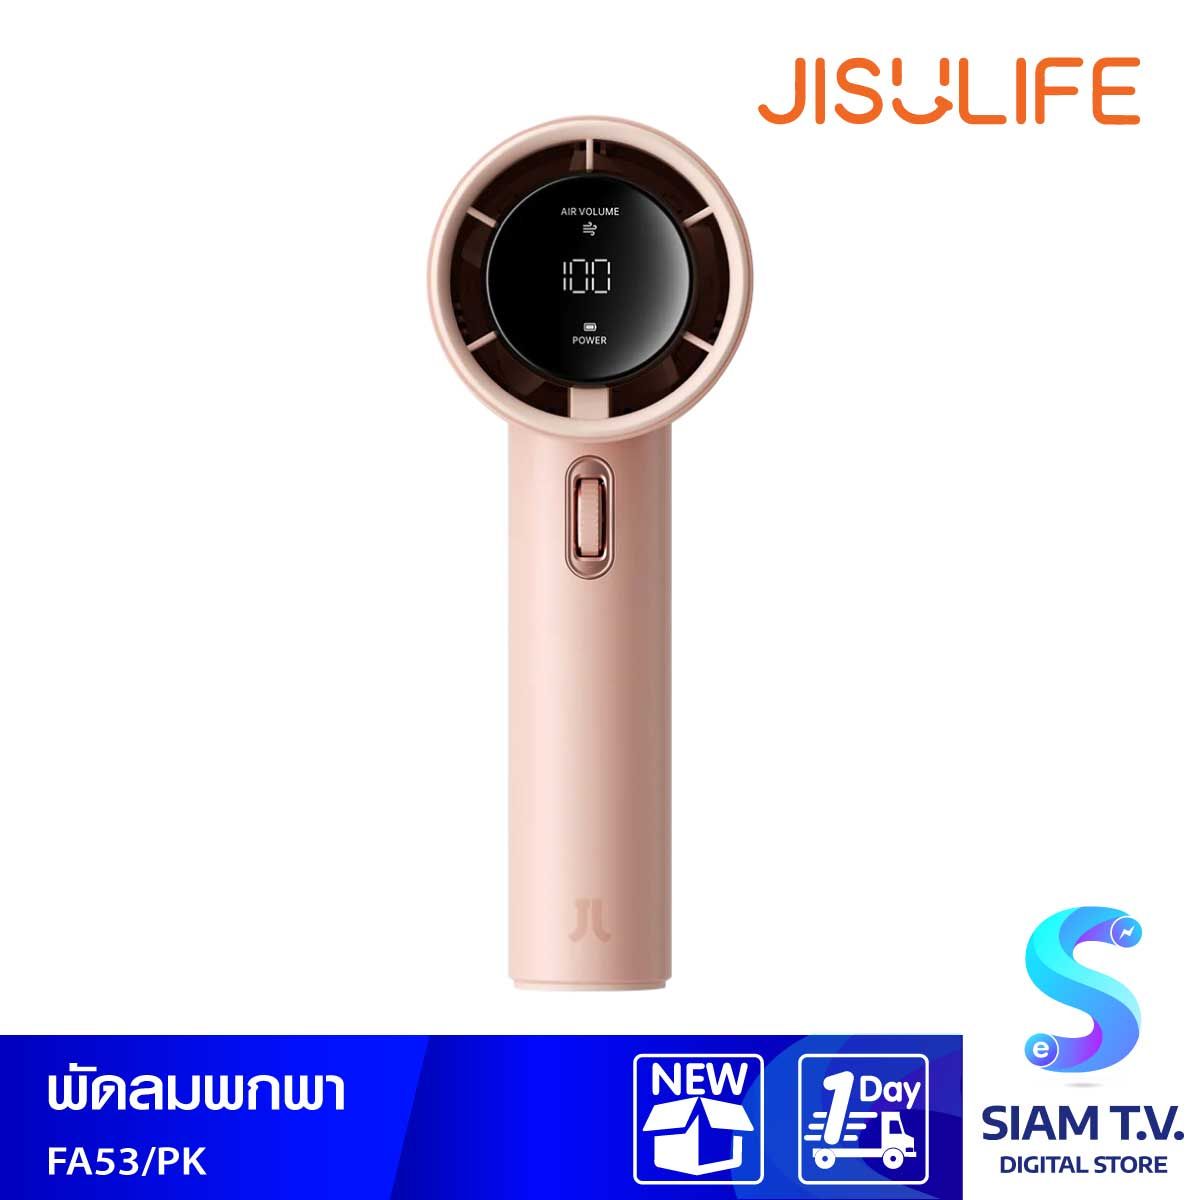 Jisulife FA53 Handheld Fan (ABS) Pink  พัดลมพกพา ให้แรงลมในระดับสูง สามารถปรับความแรงลมได้ 100 ระดับ